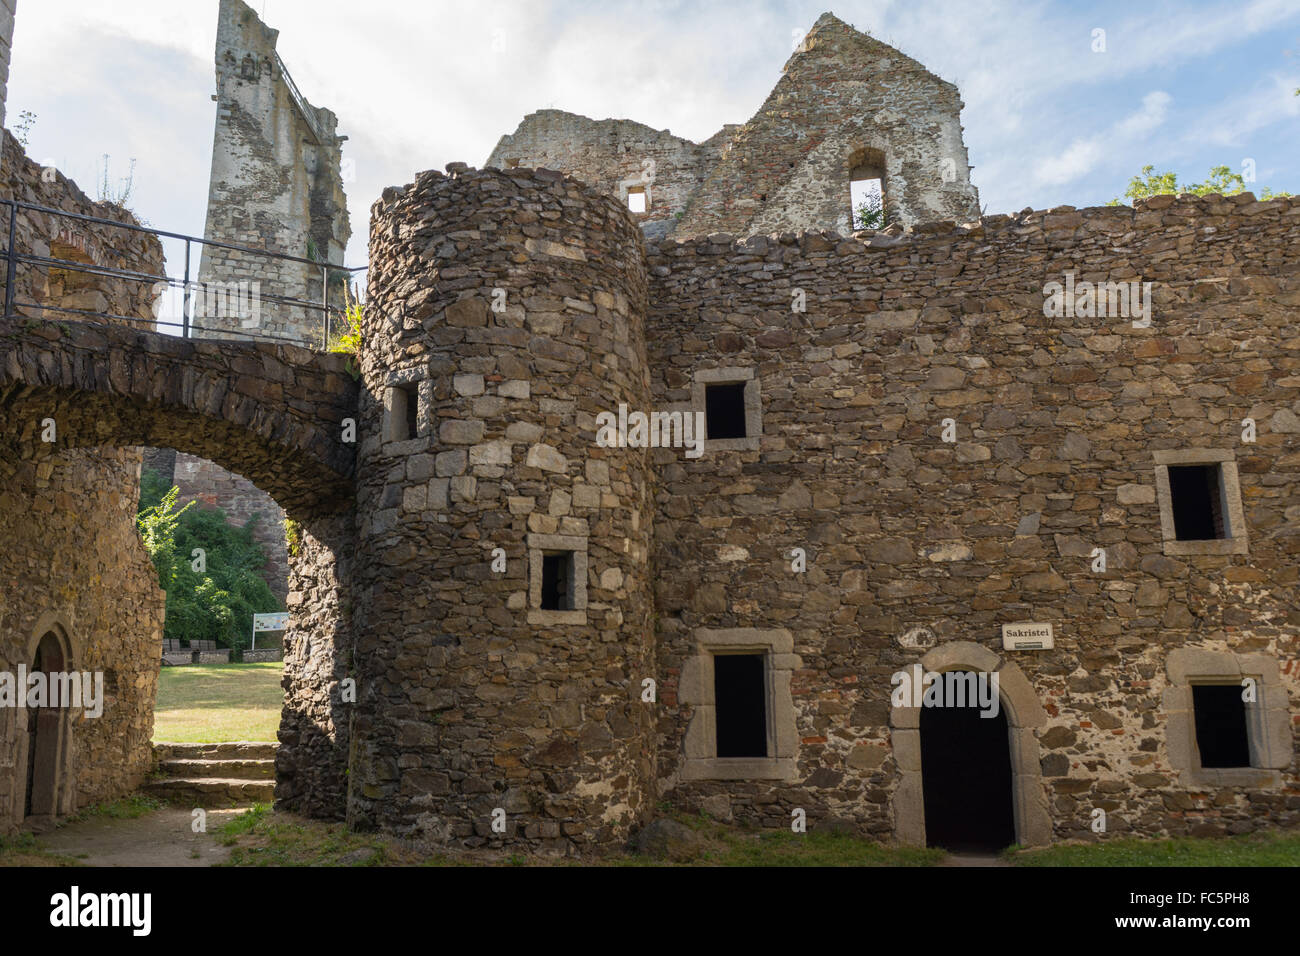 Medieval castle Schaunburg - Austria Stock Photo